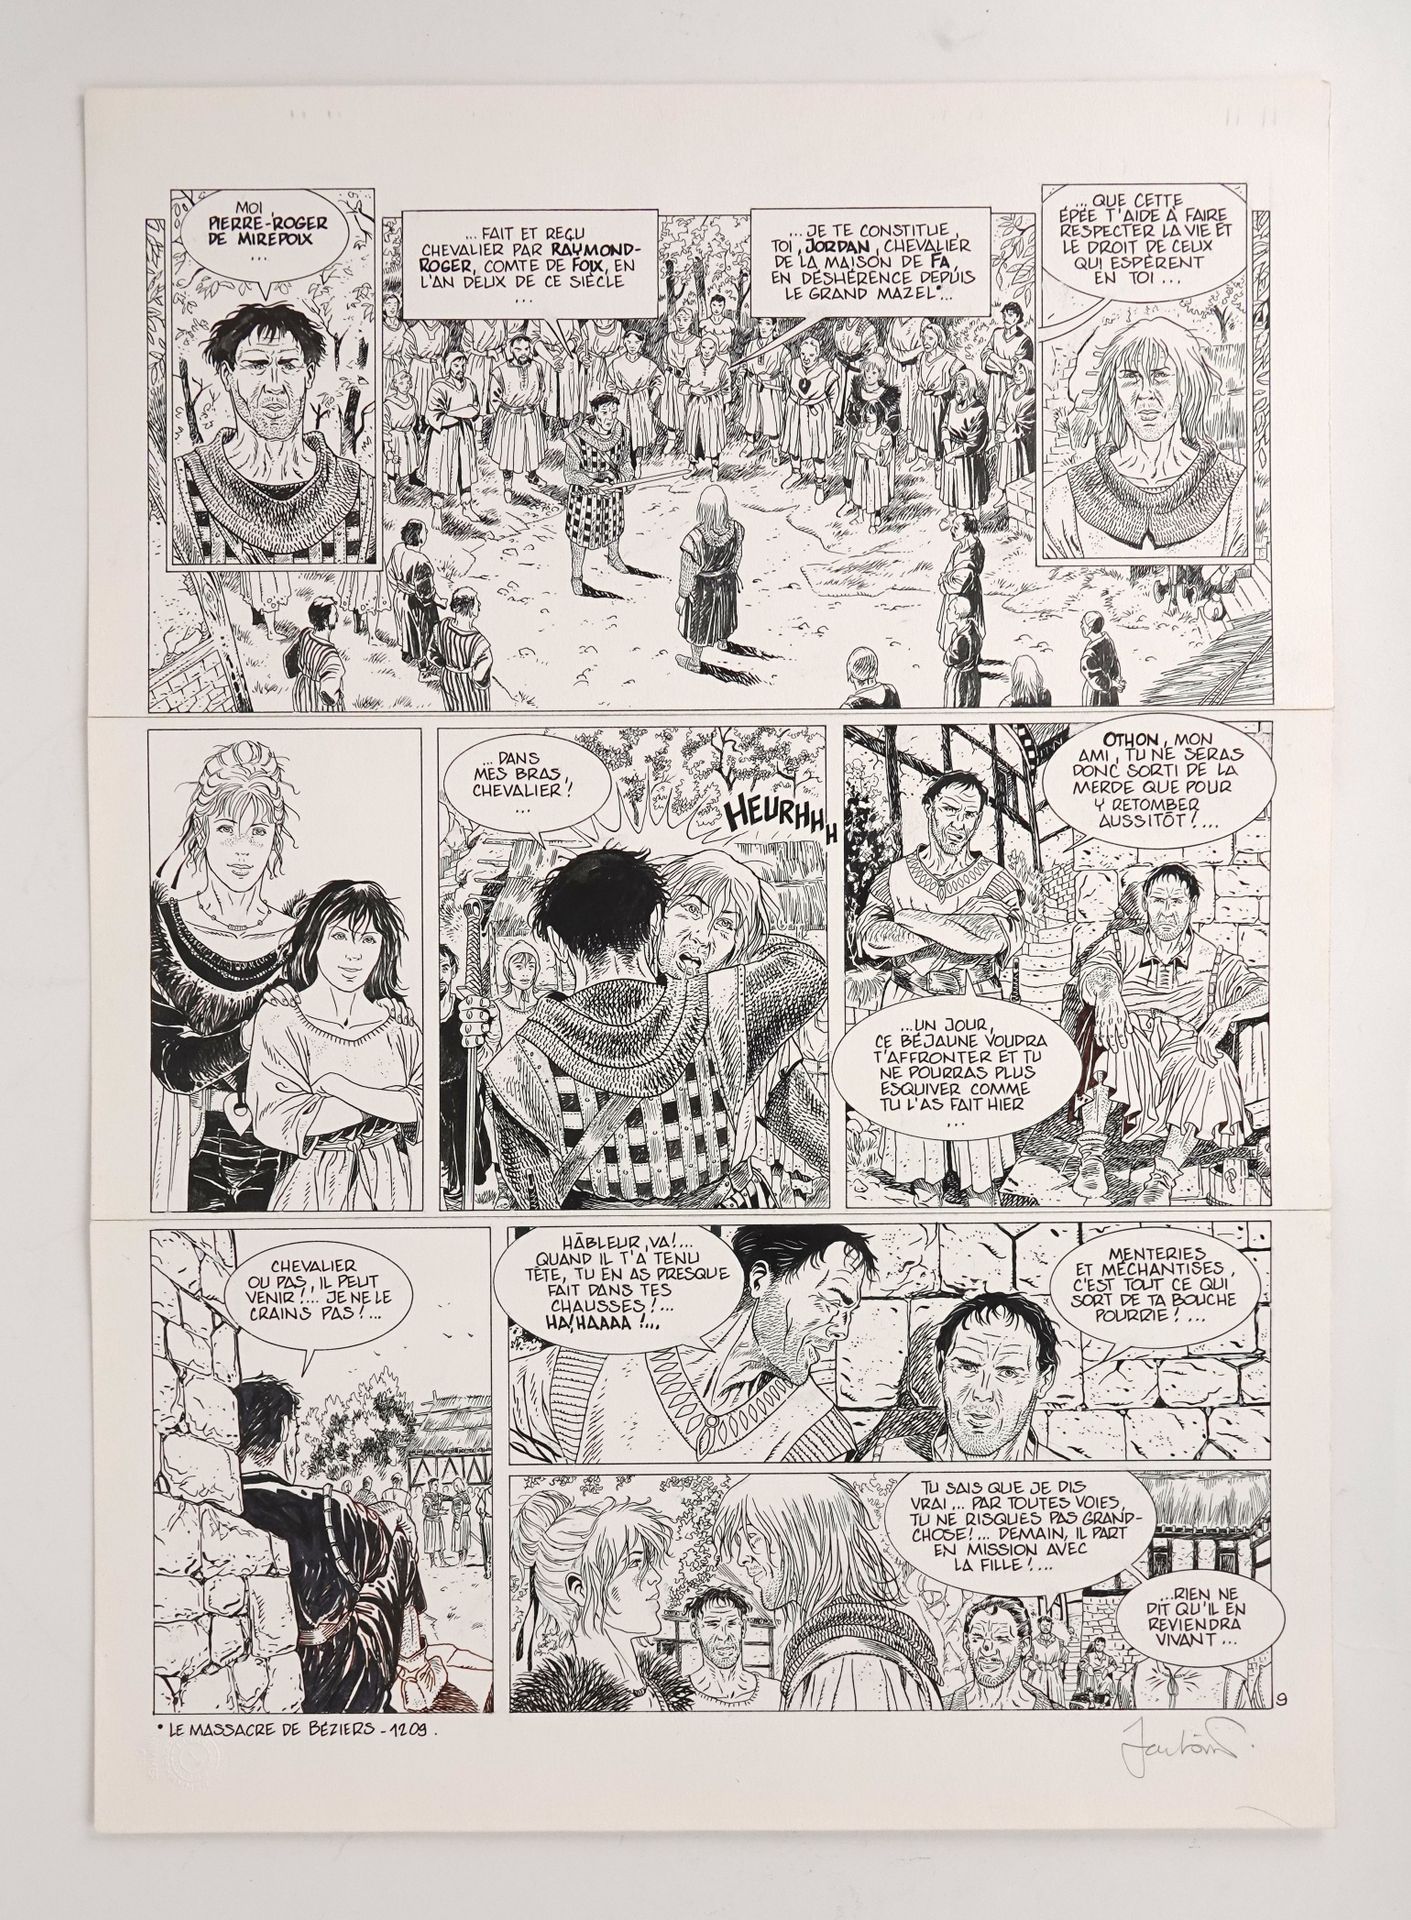 Null 雅比内特
灰烬的记忆
2001年Glénat出版的画册《Calimala》中的图版9
印度墨水，板块右下角有签名
51 x 36厘米